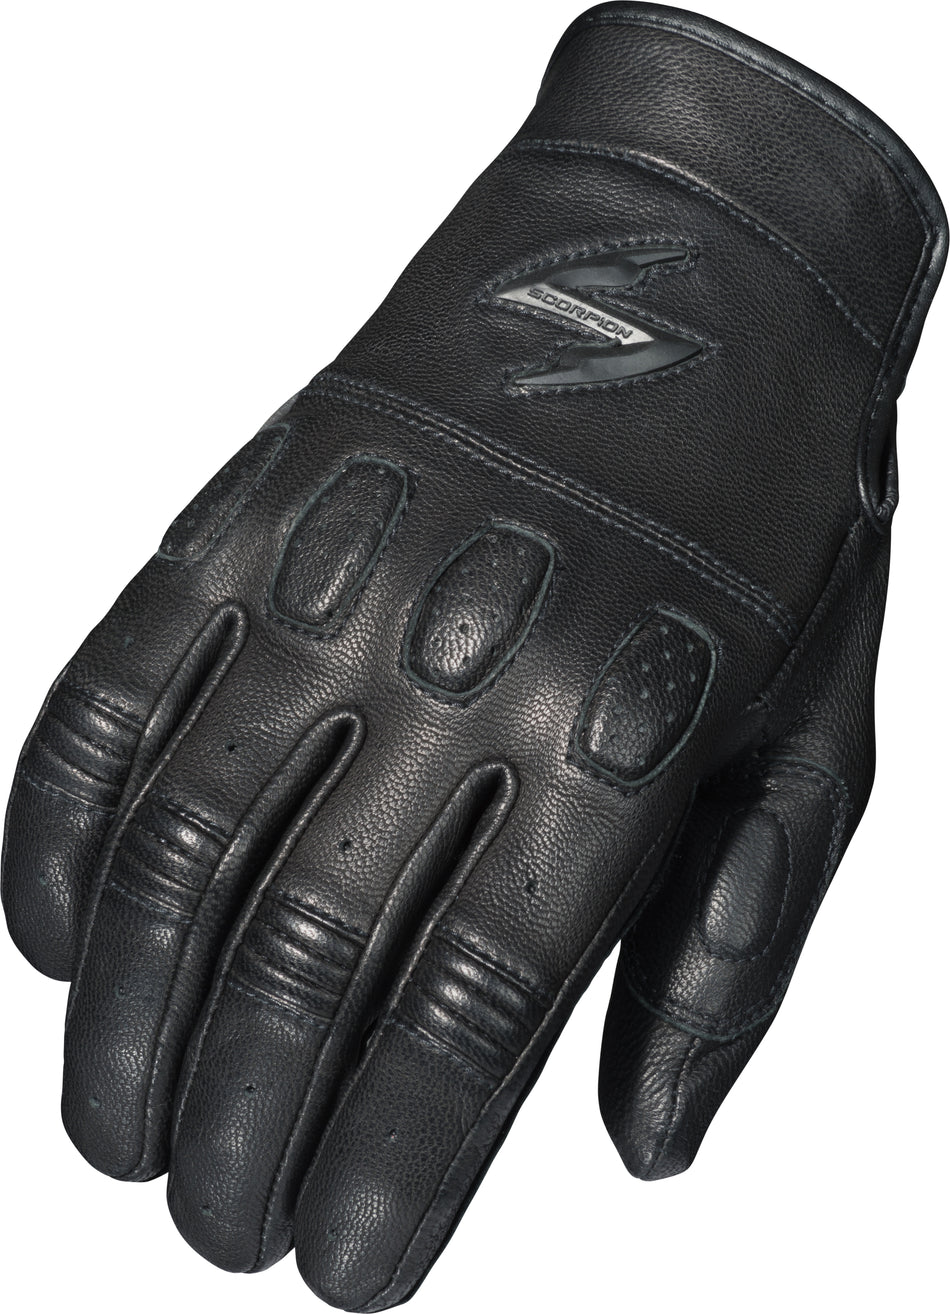 SCORPION EXO Gripster Gloves Black Md G34-034